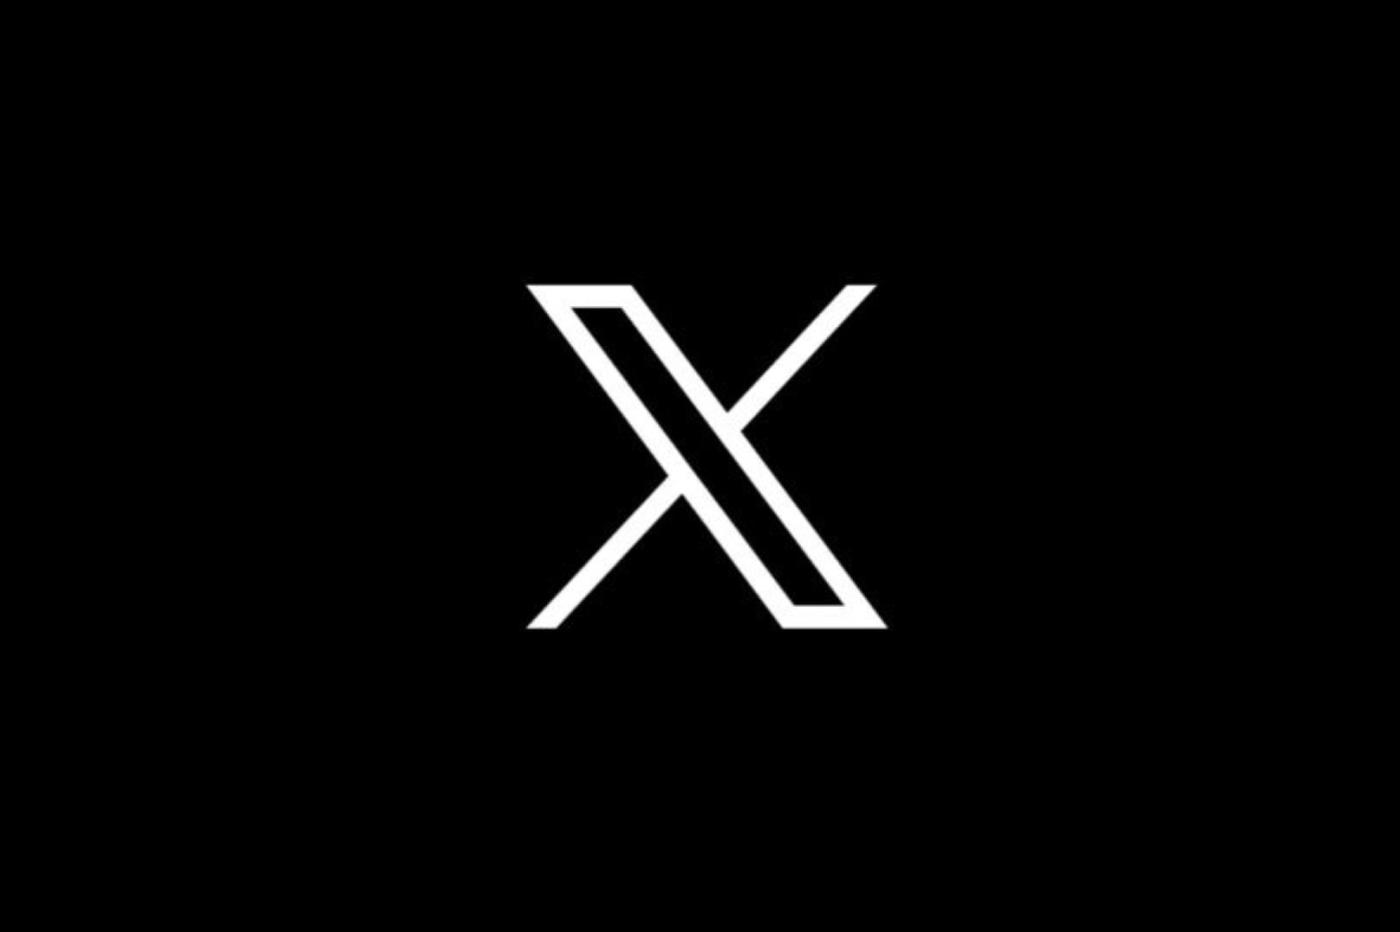 X.com remplace Twitter logo